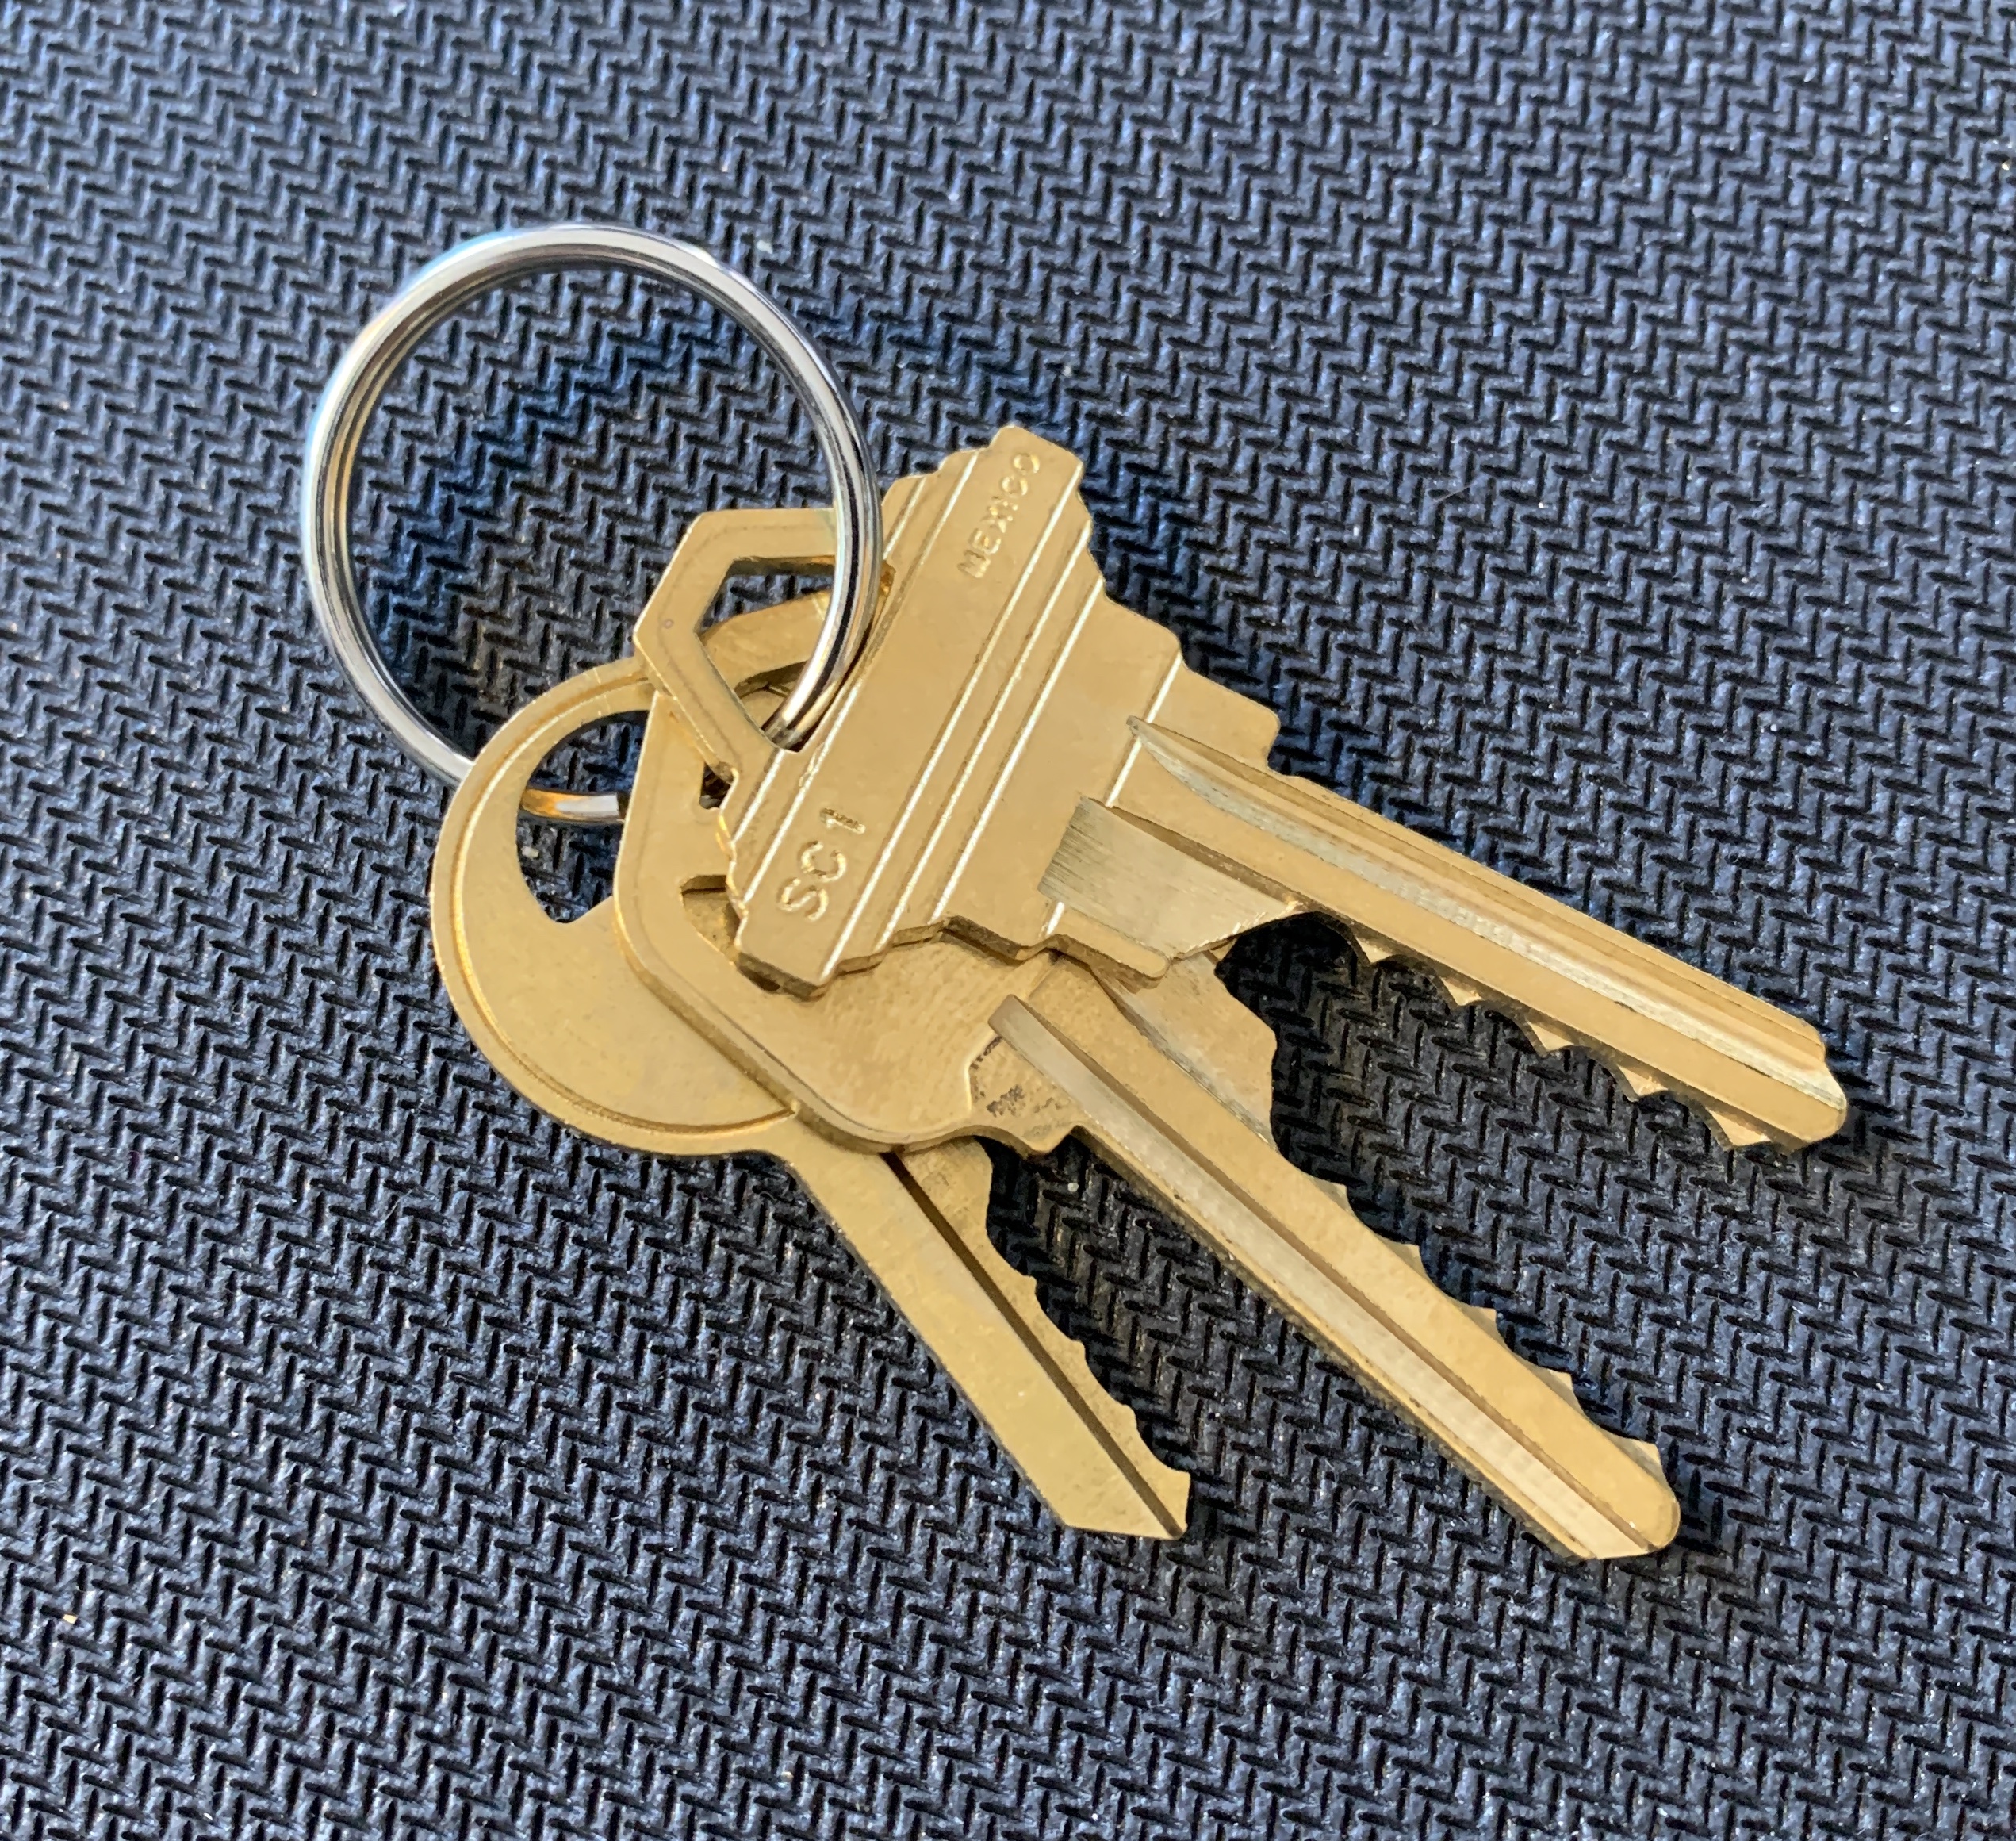 Set of Bumping Keys